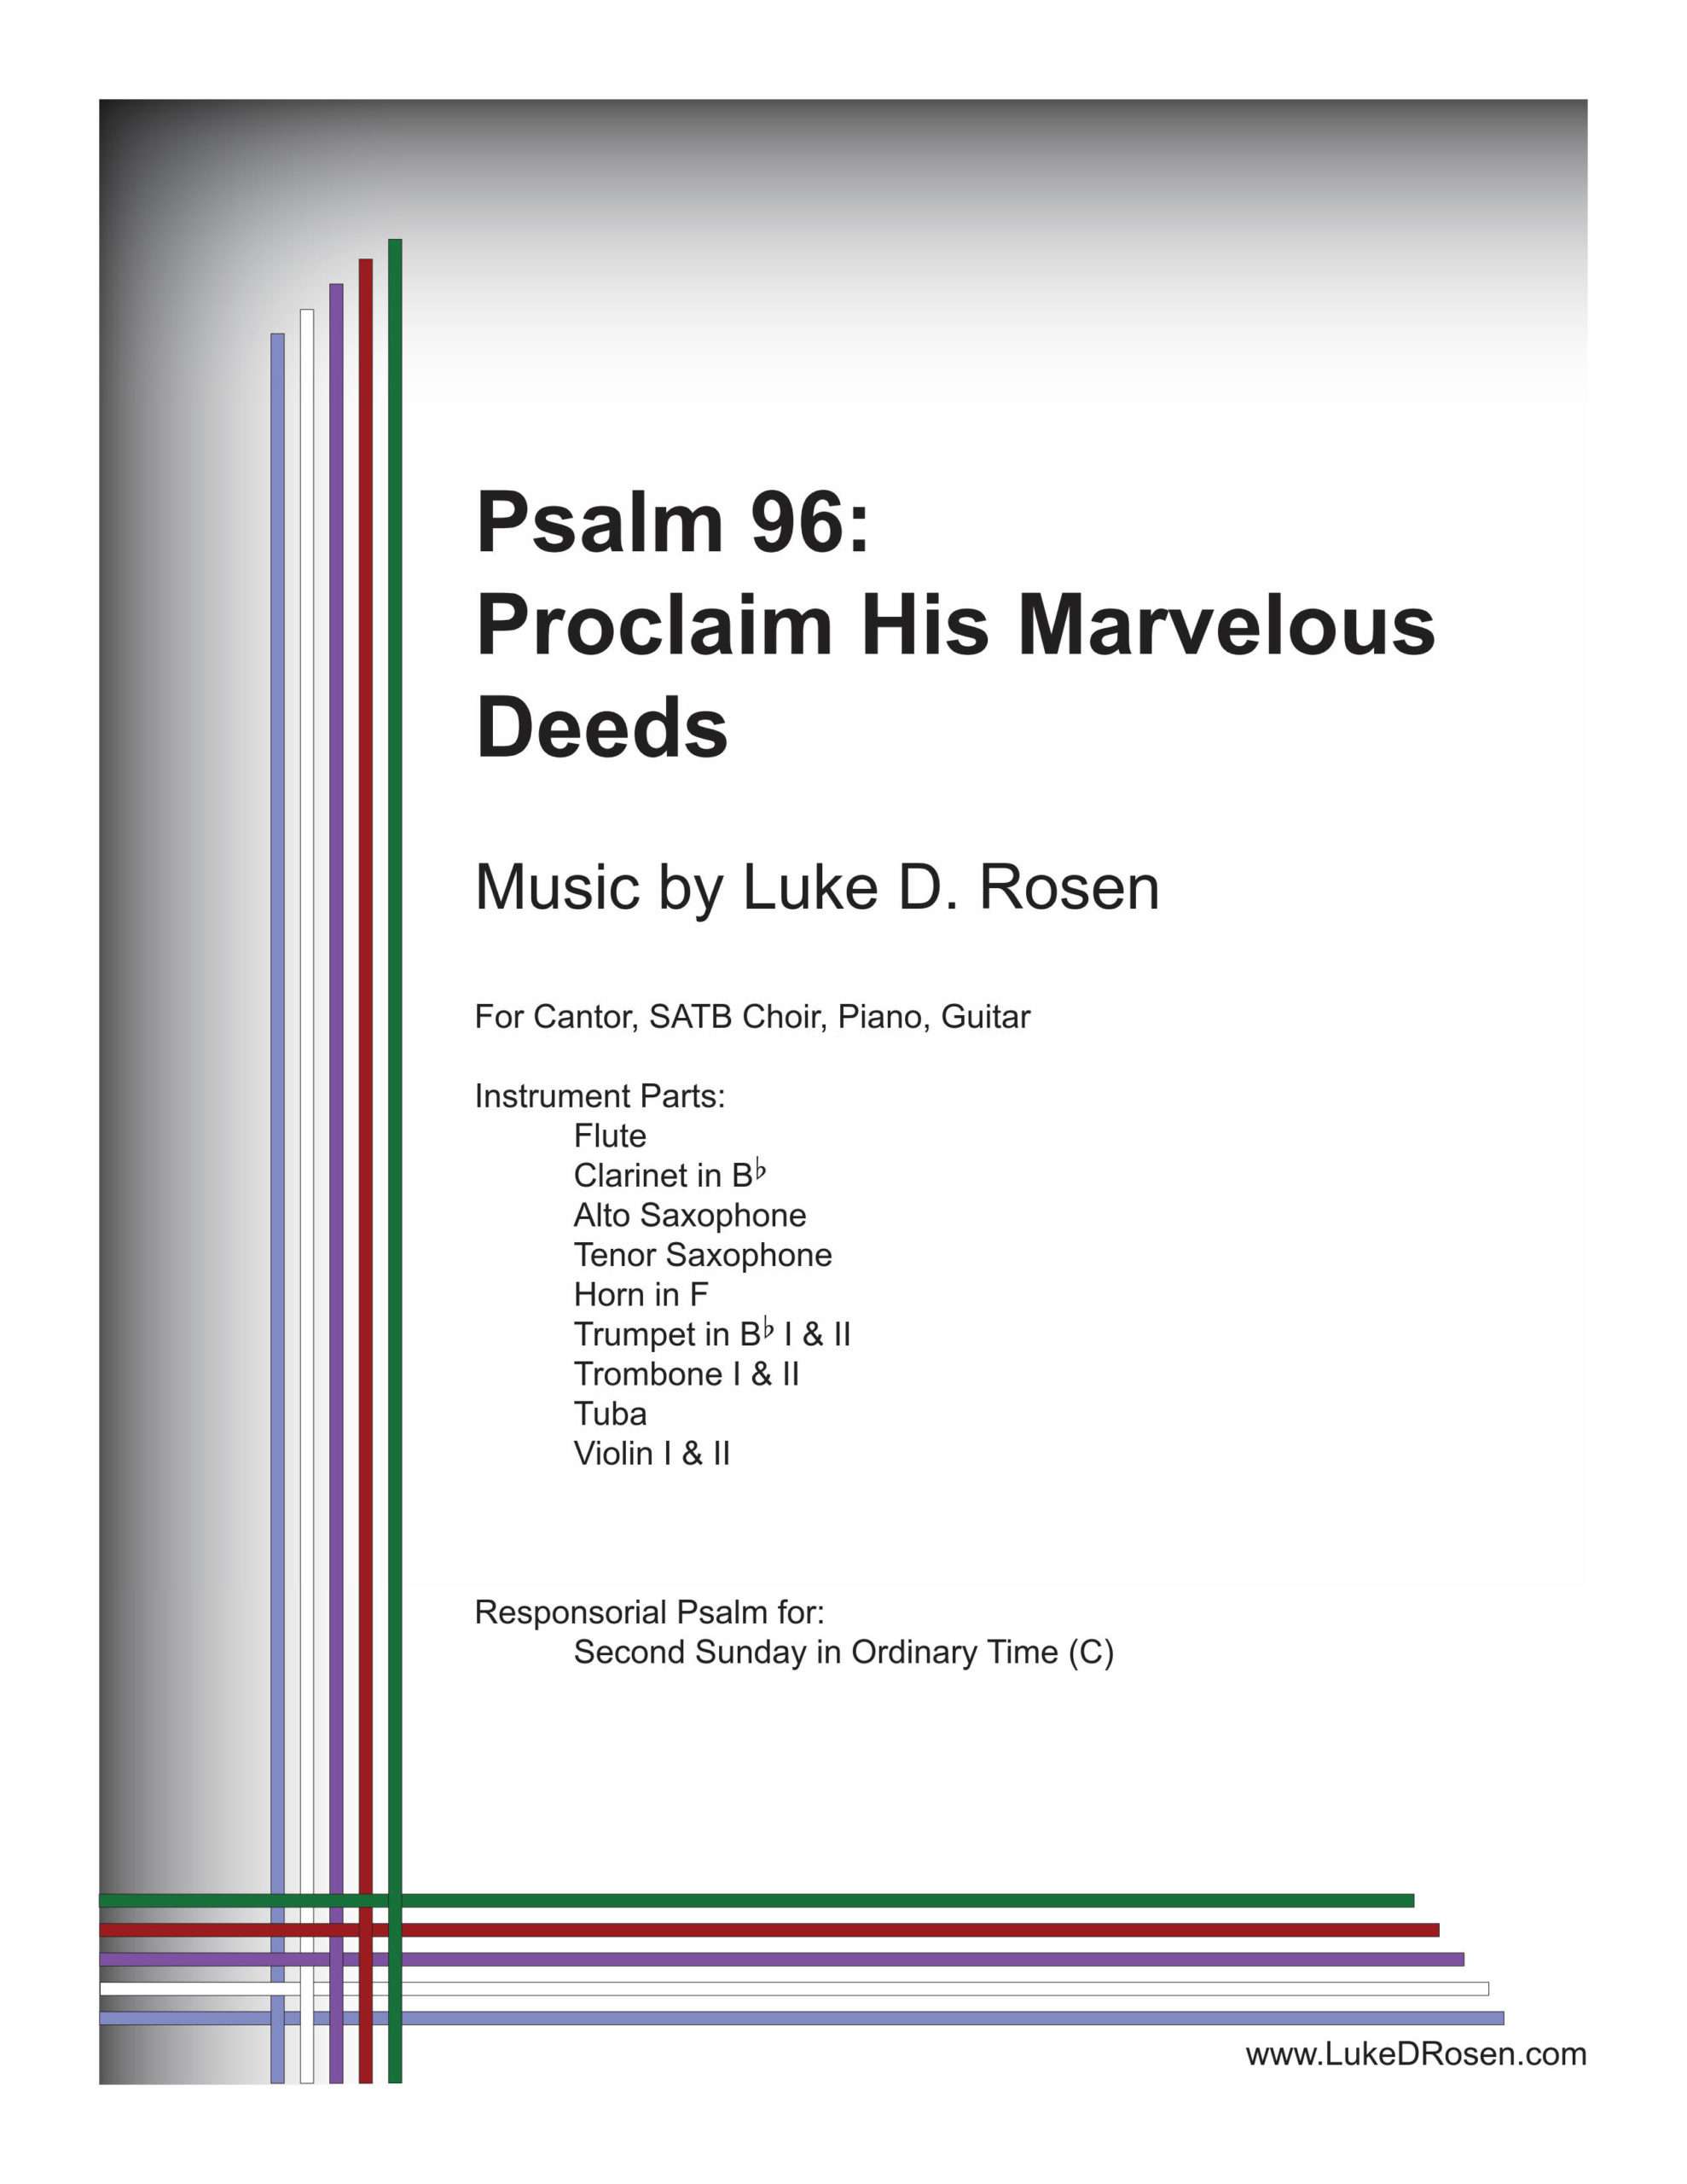 Psalm 96 – Proclaim His Marvelous Deeds (Rosen)